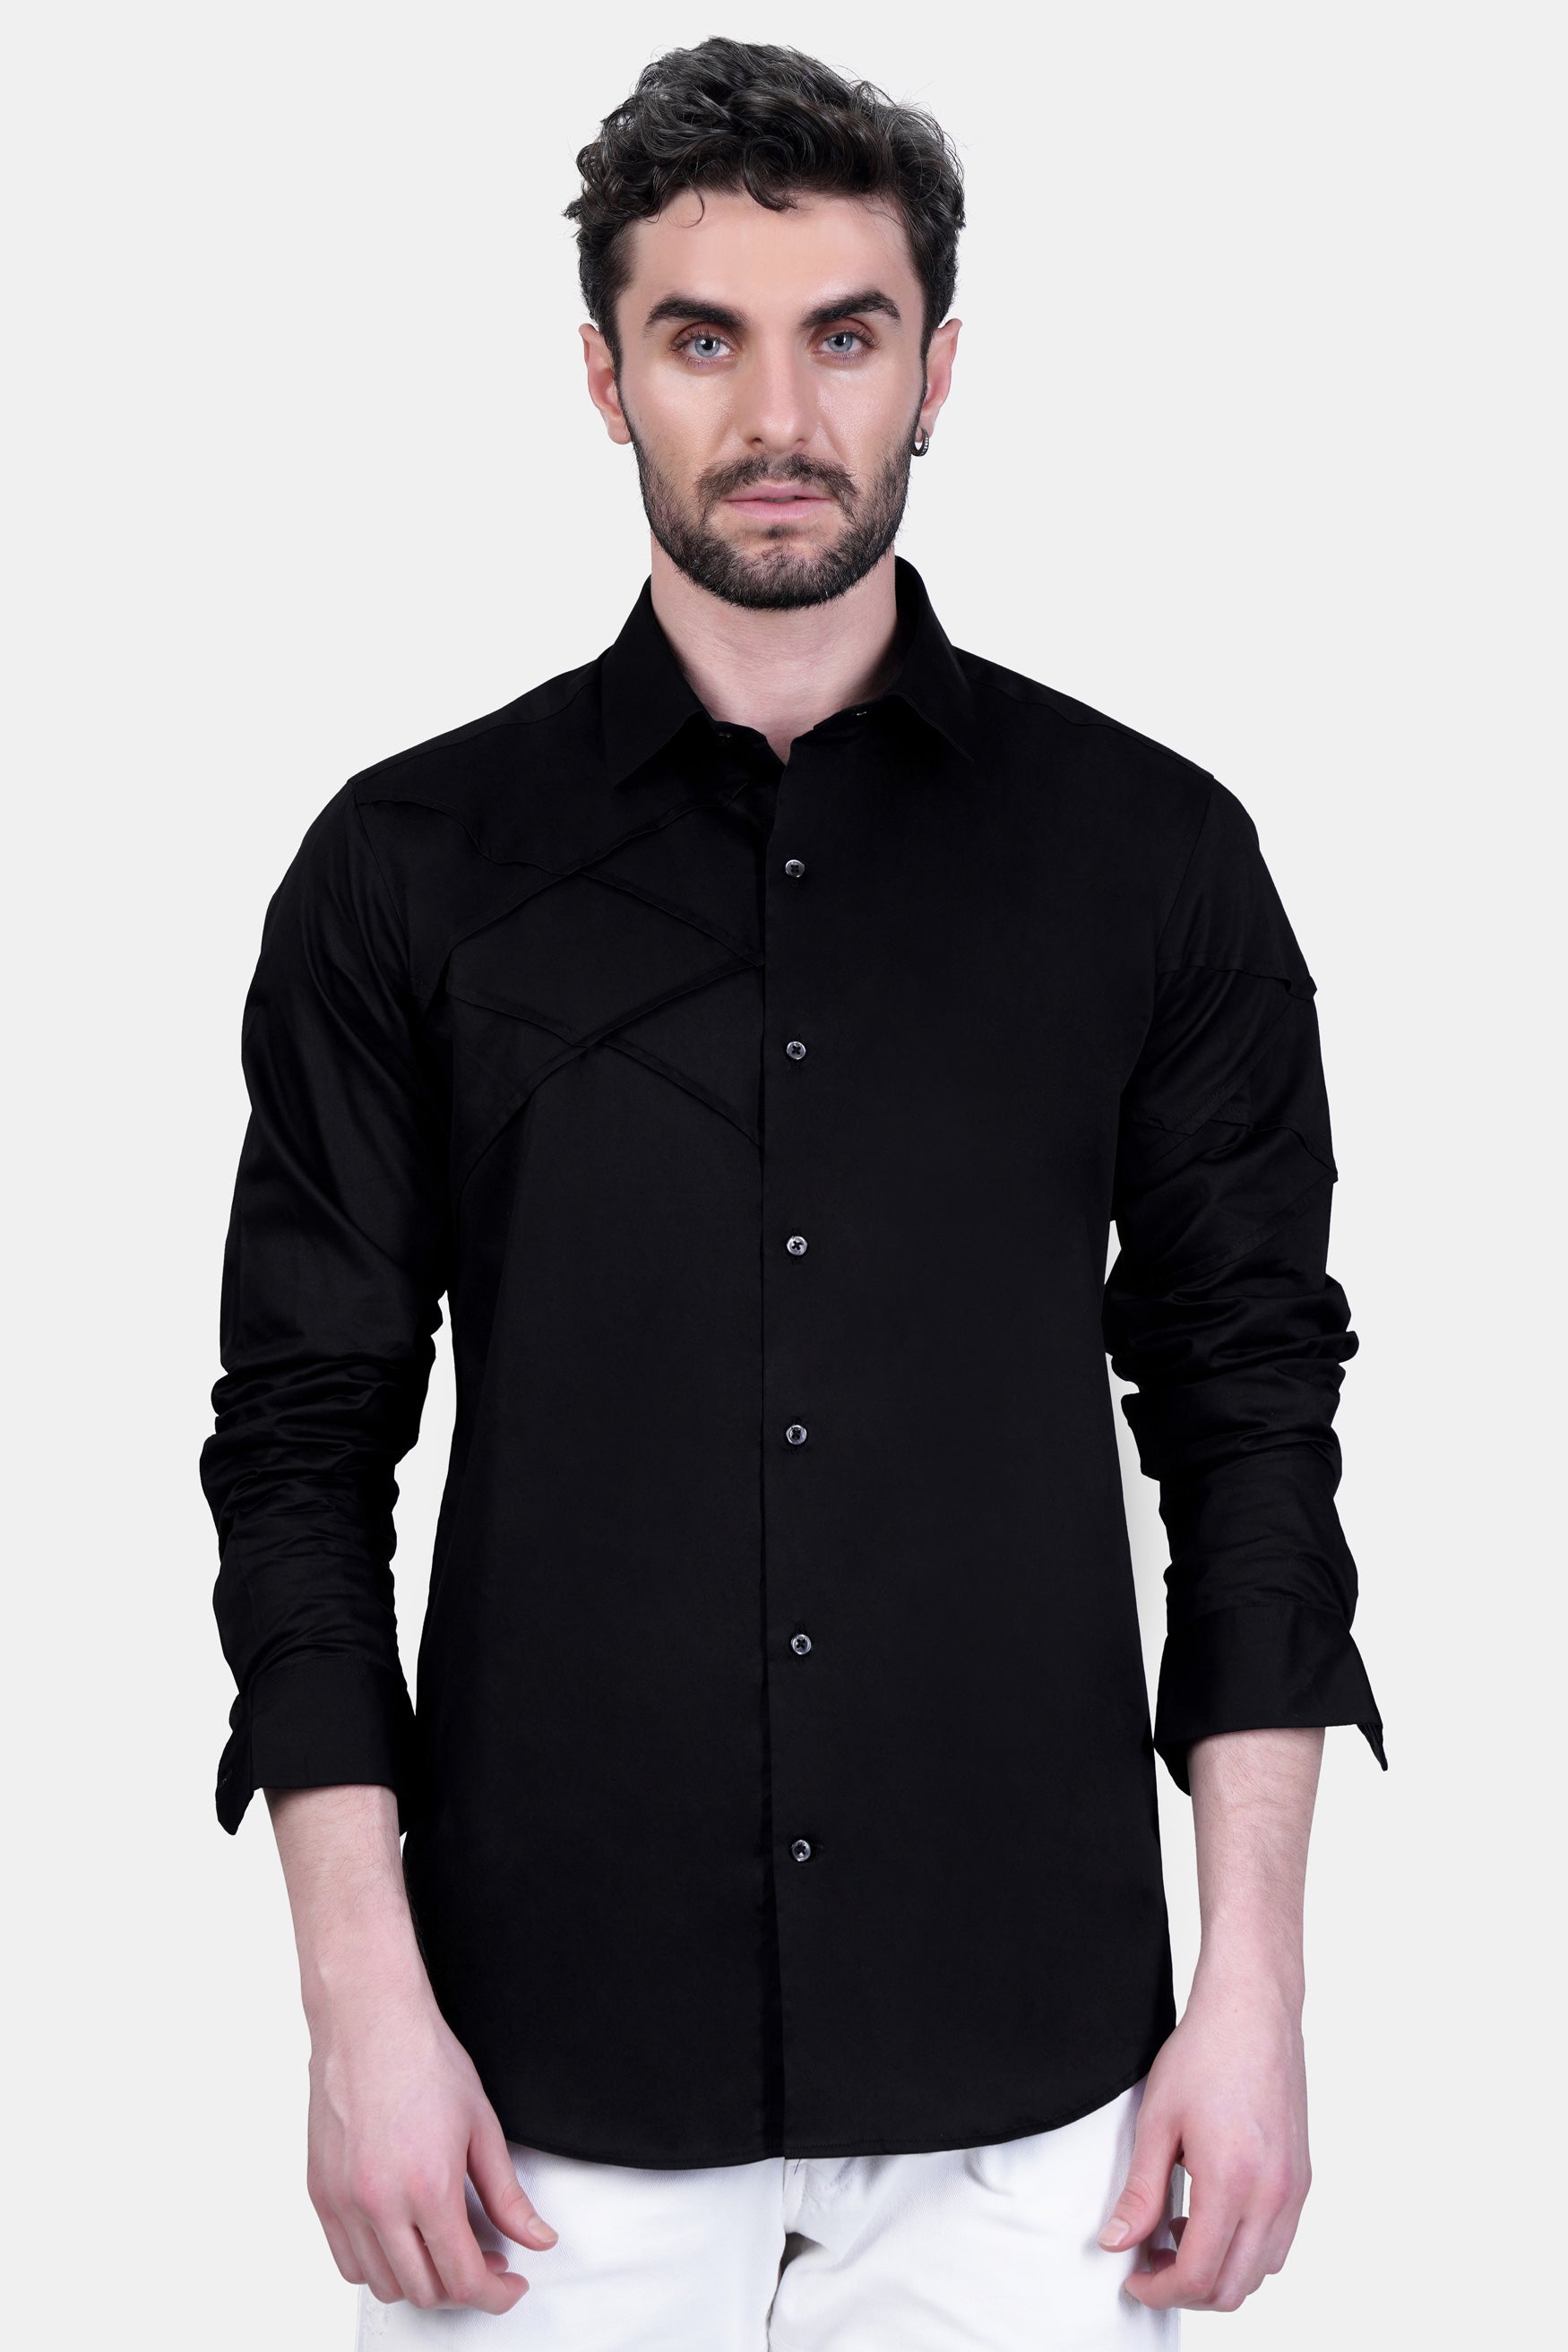 Jade Black Cross Tucks Subtle Sheen Super Soft Premium Cotton Designer Shirt